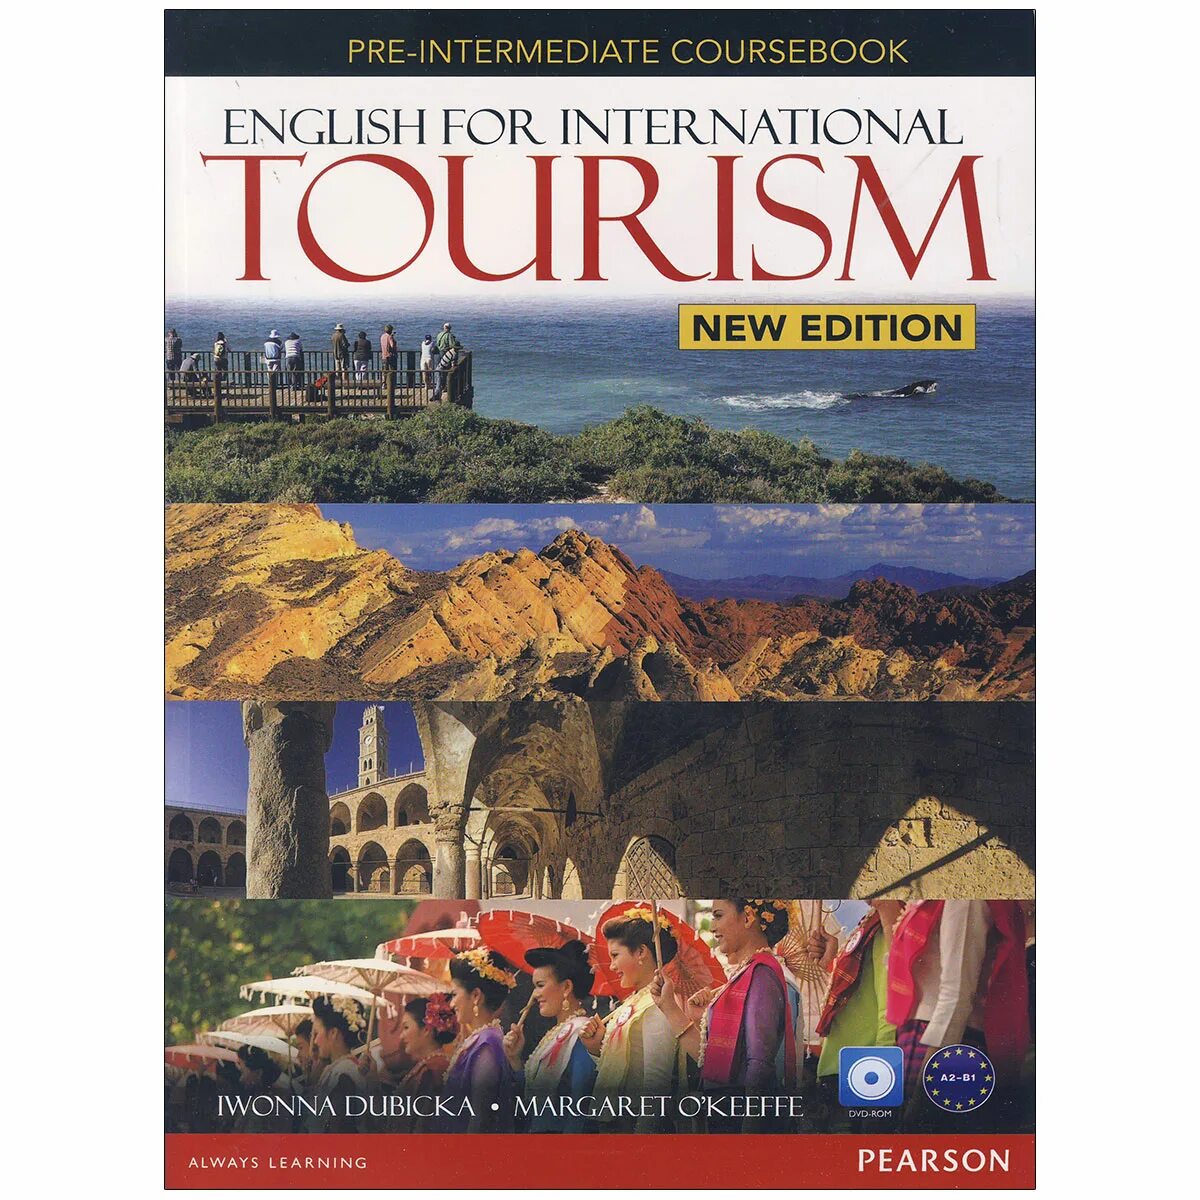 English for International Tourism: pre-Intermediate Coursebook. English for International Tourism учебник. Английский в туризме учебник. English for Tourism pre-Intermediate. Tourism book